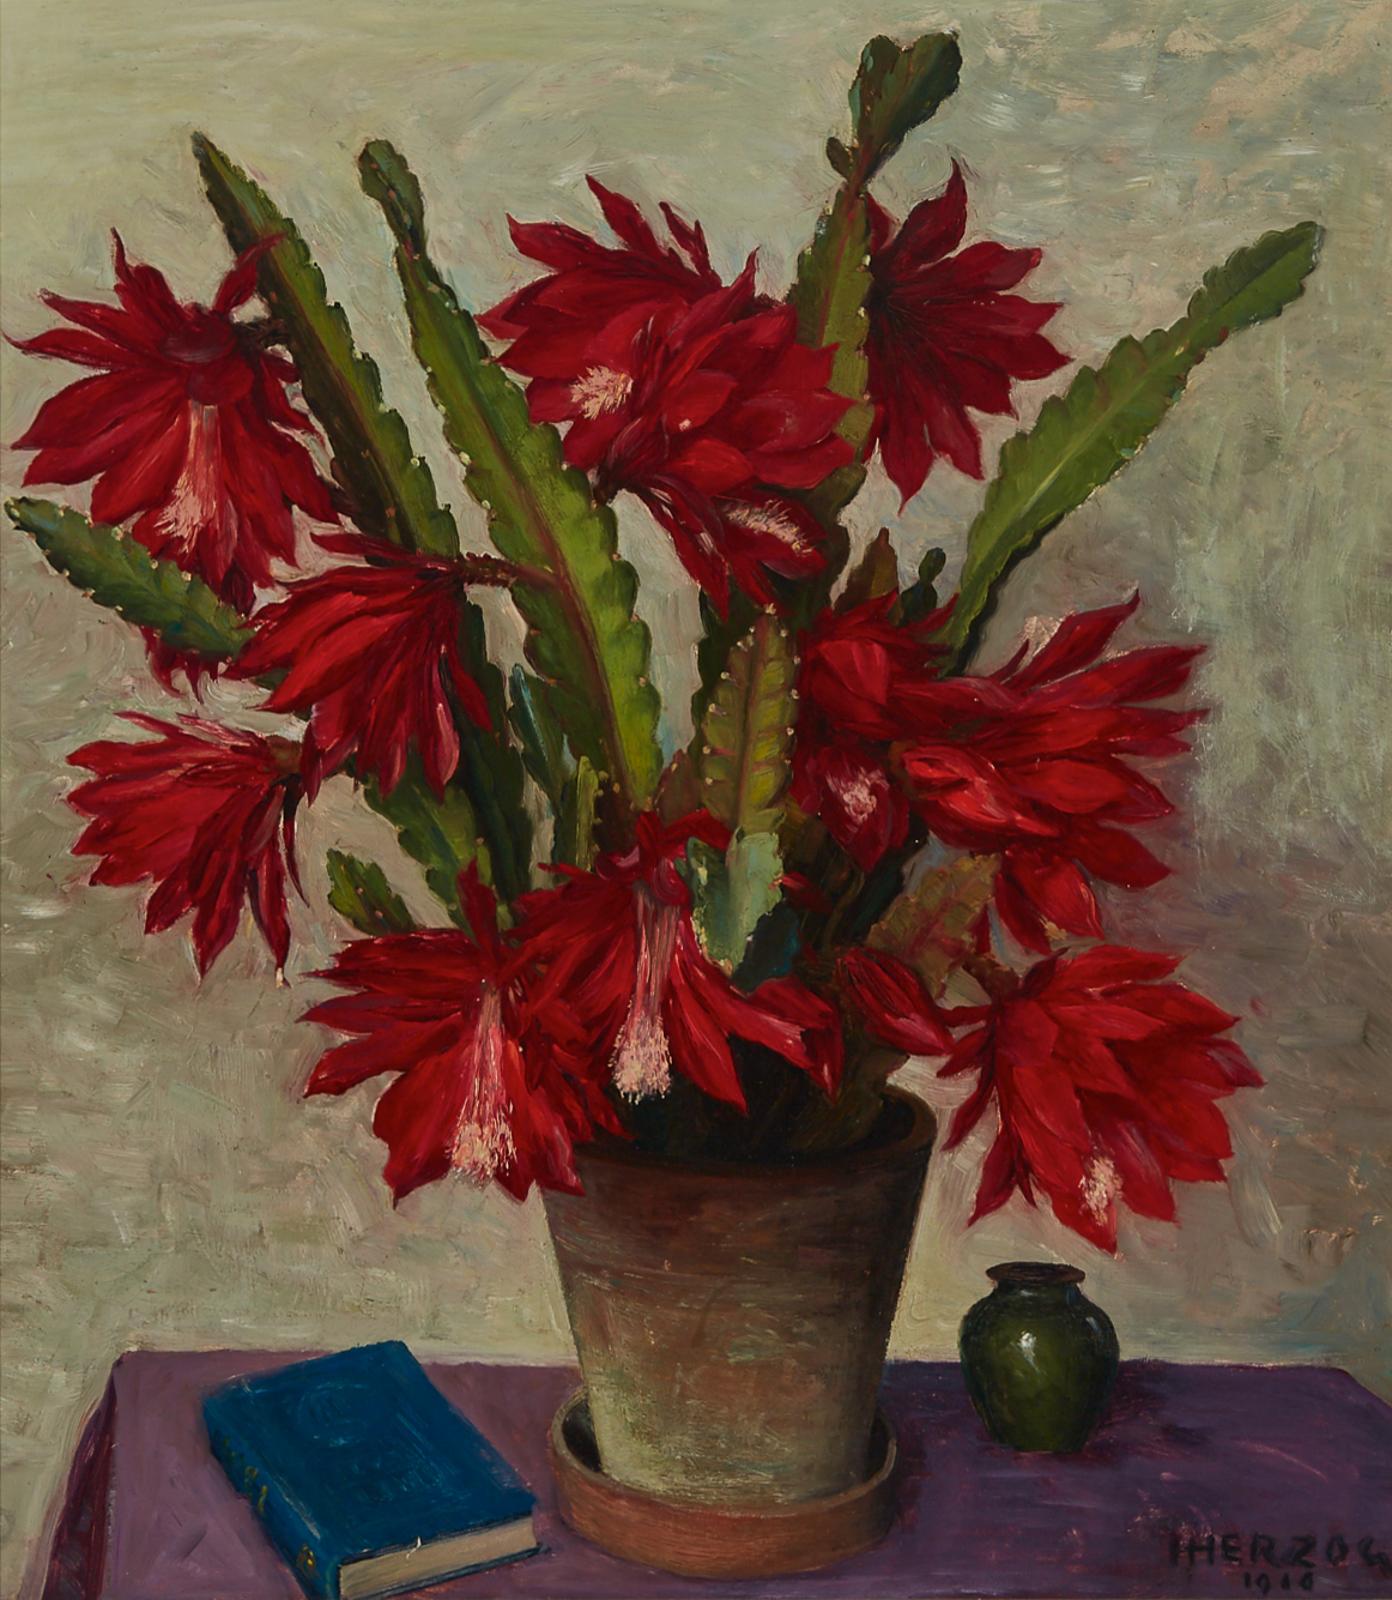 Jakob Herzog (1867-1959) - Christmas Cactus With Book And Vase, 1910